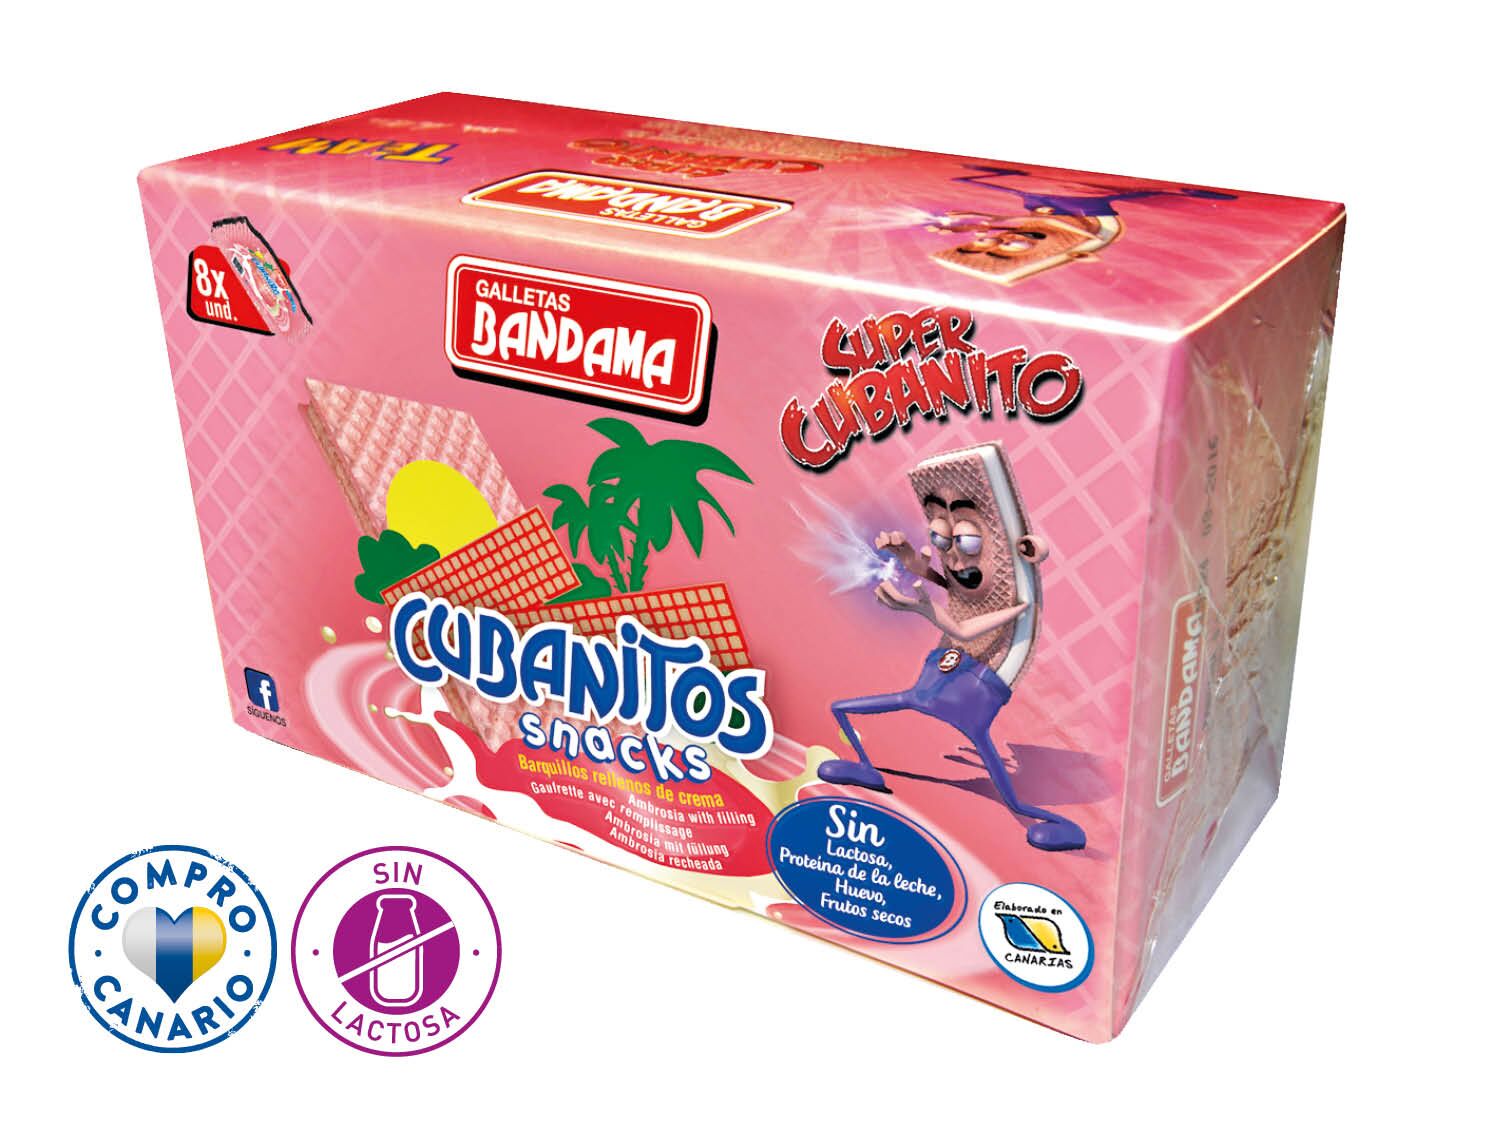 Bandama® Cubanitos Snacks